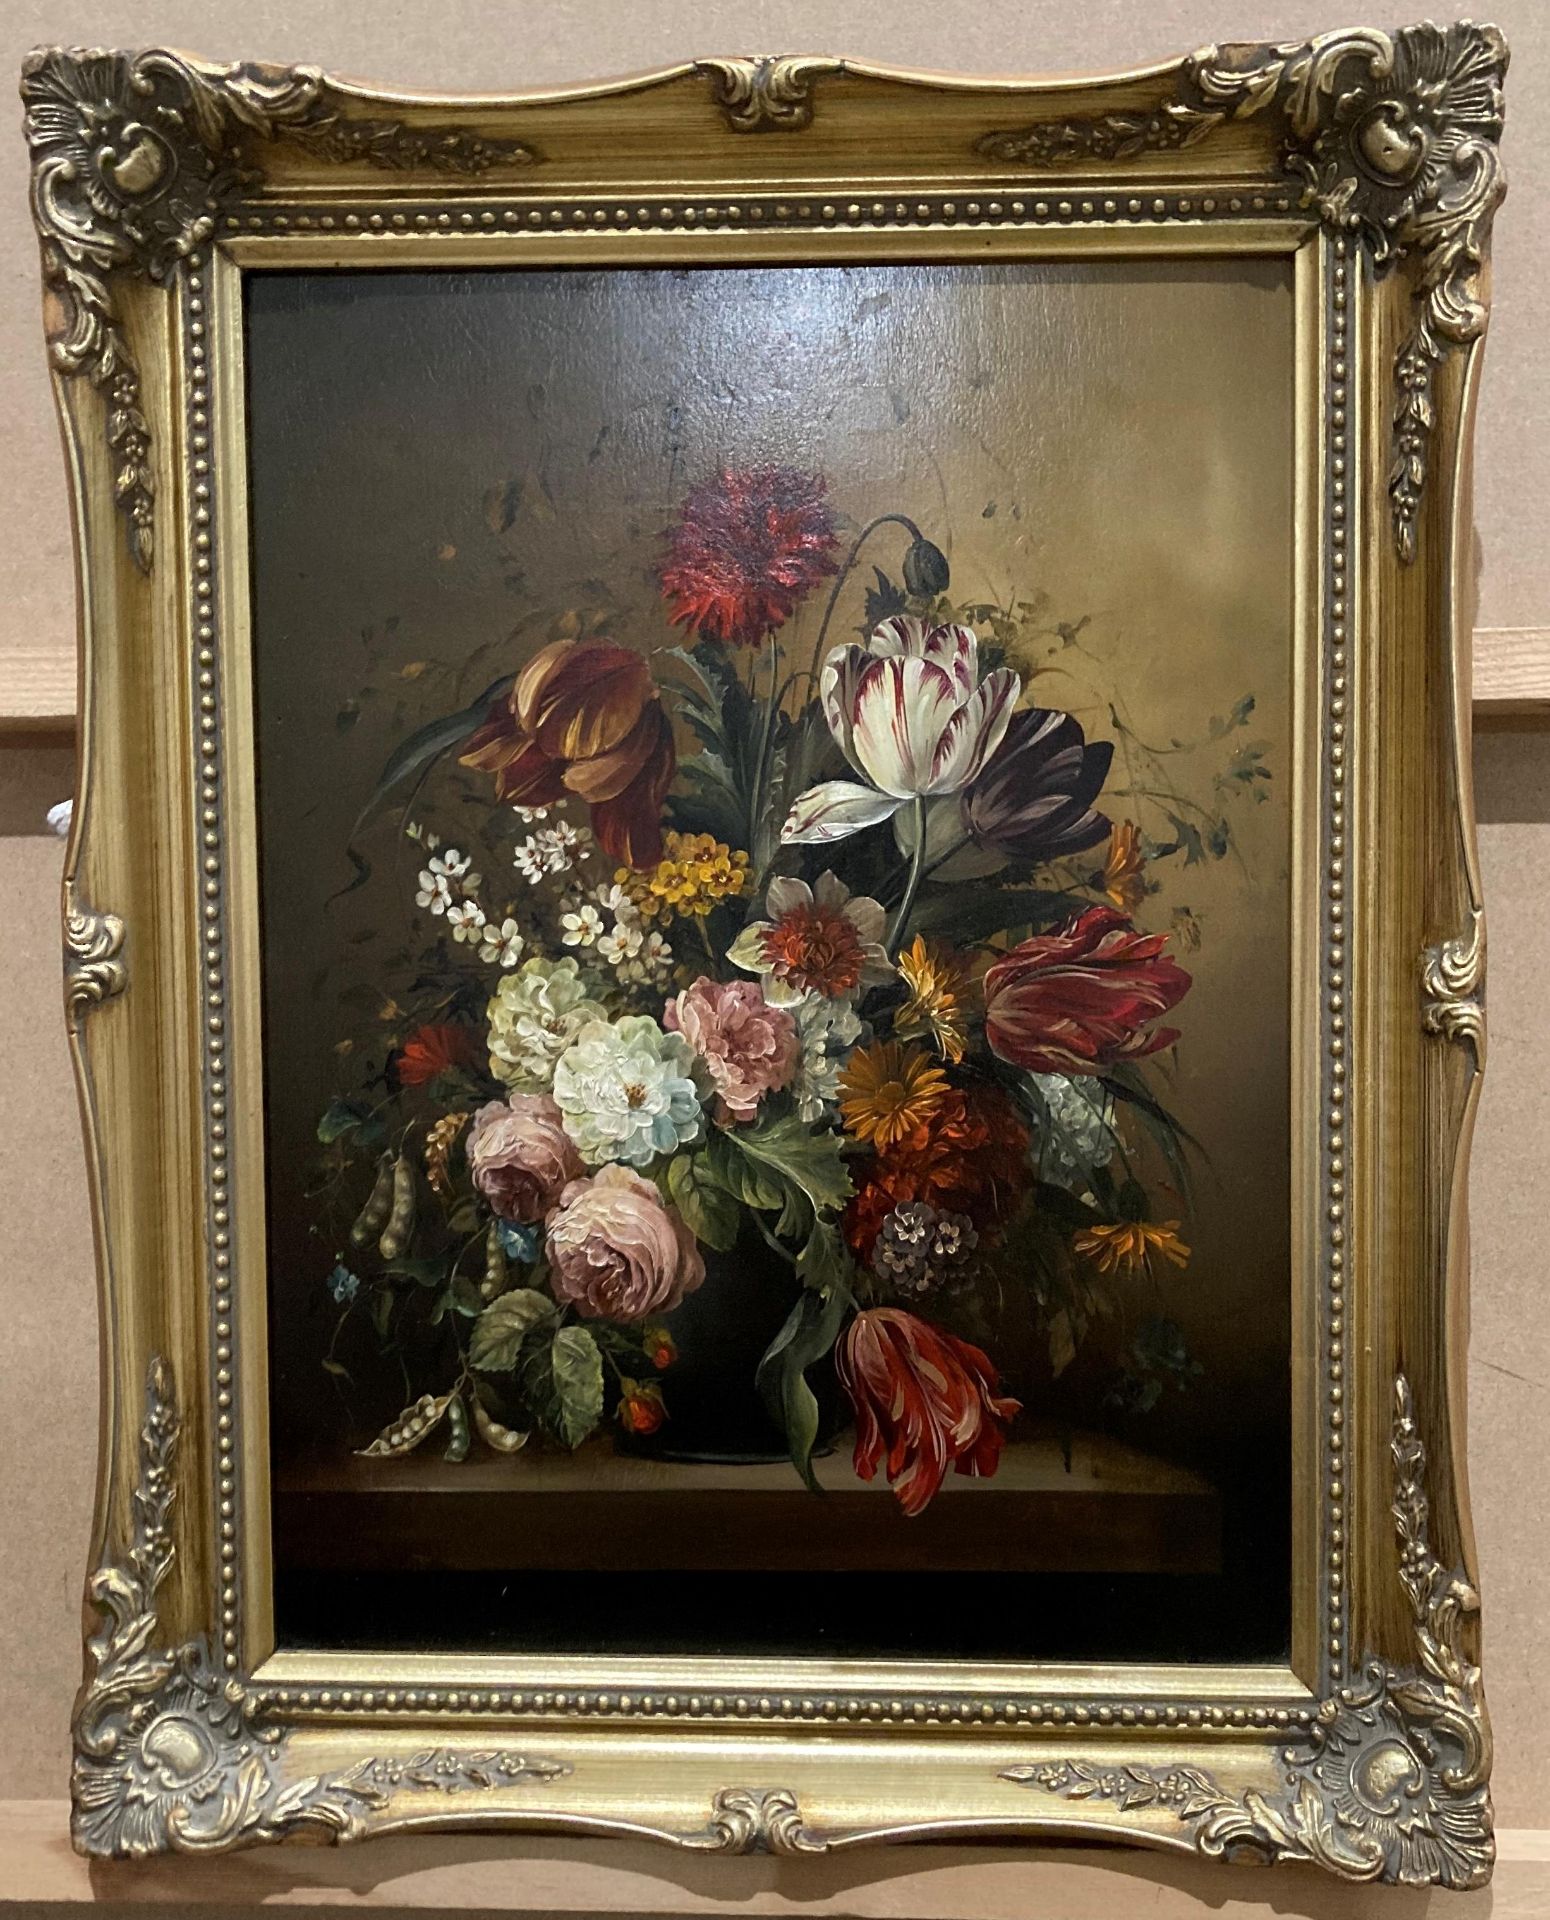 B Palm, 'Still Life - Flowers', oil on board, ornate gilt frame,